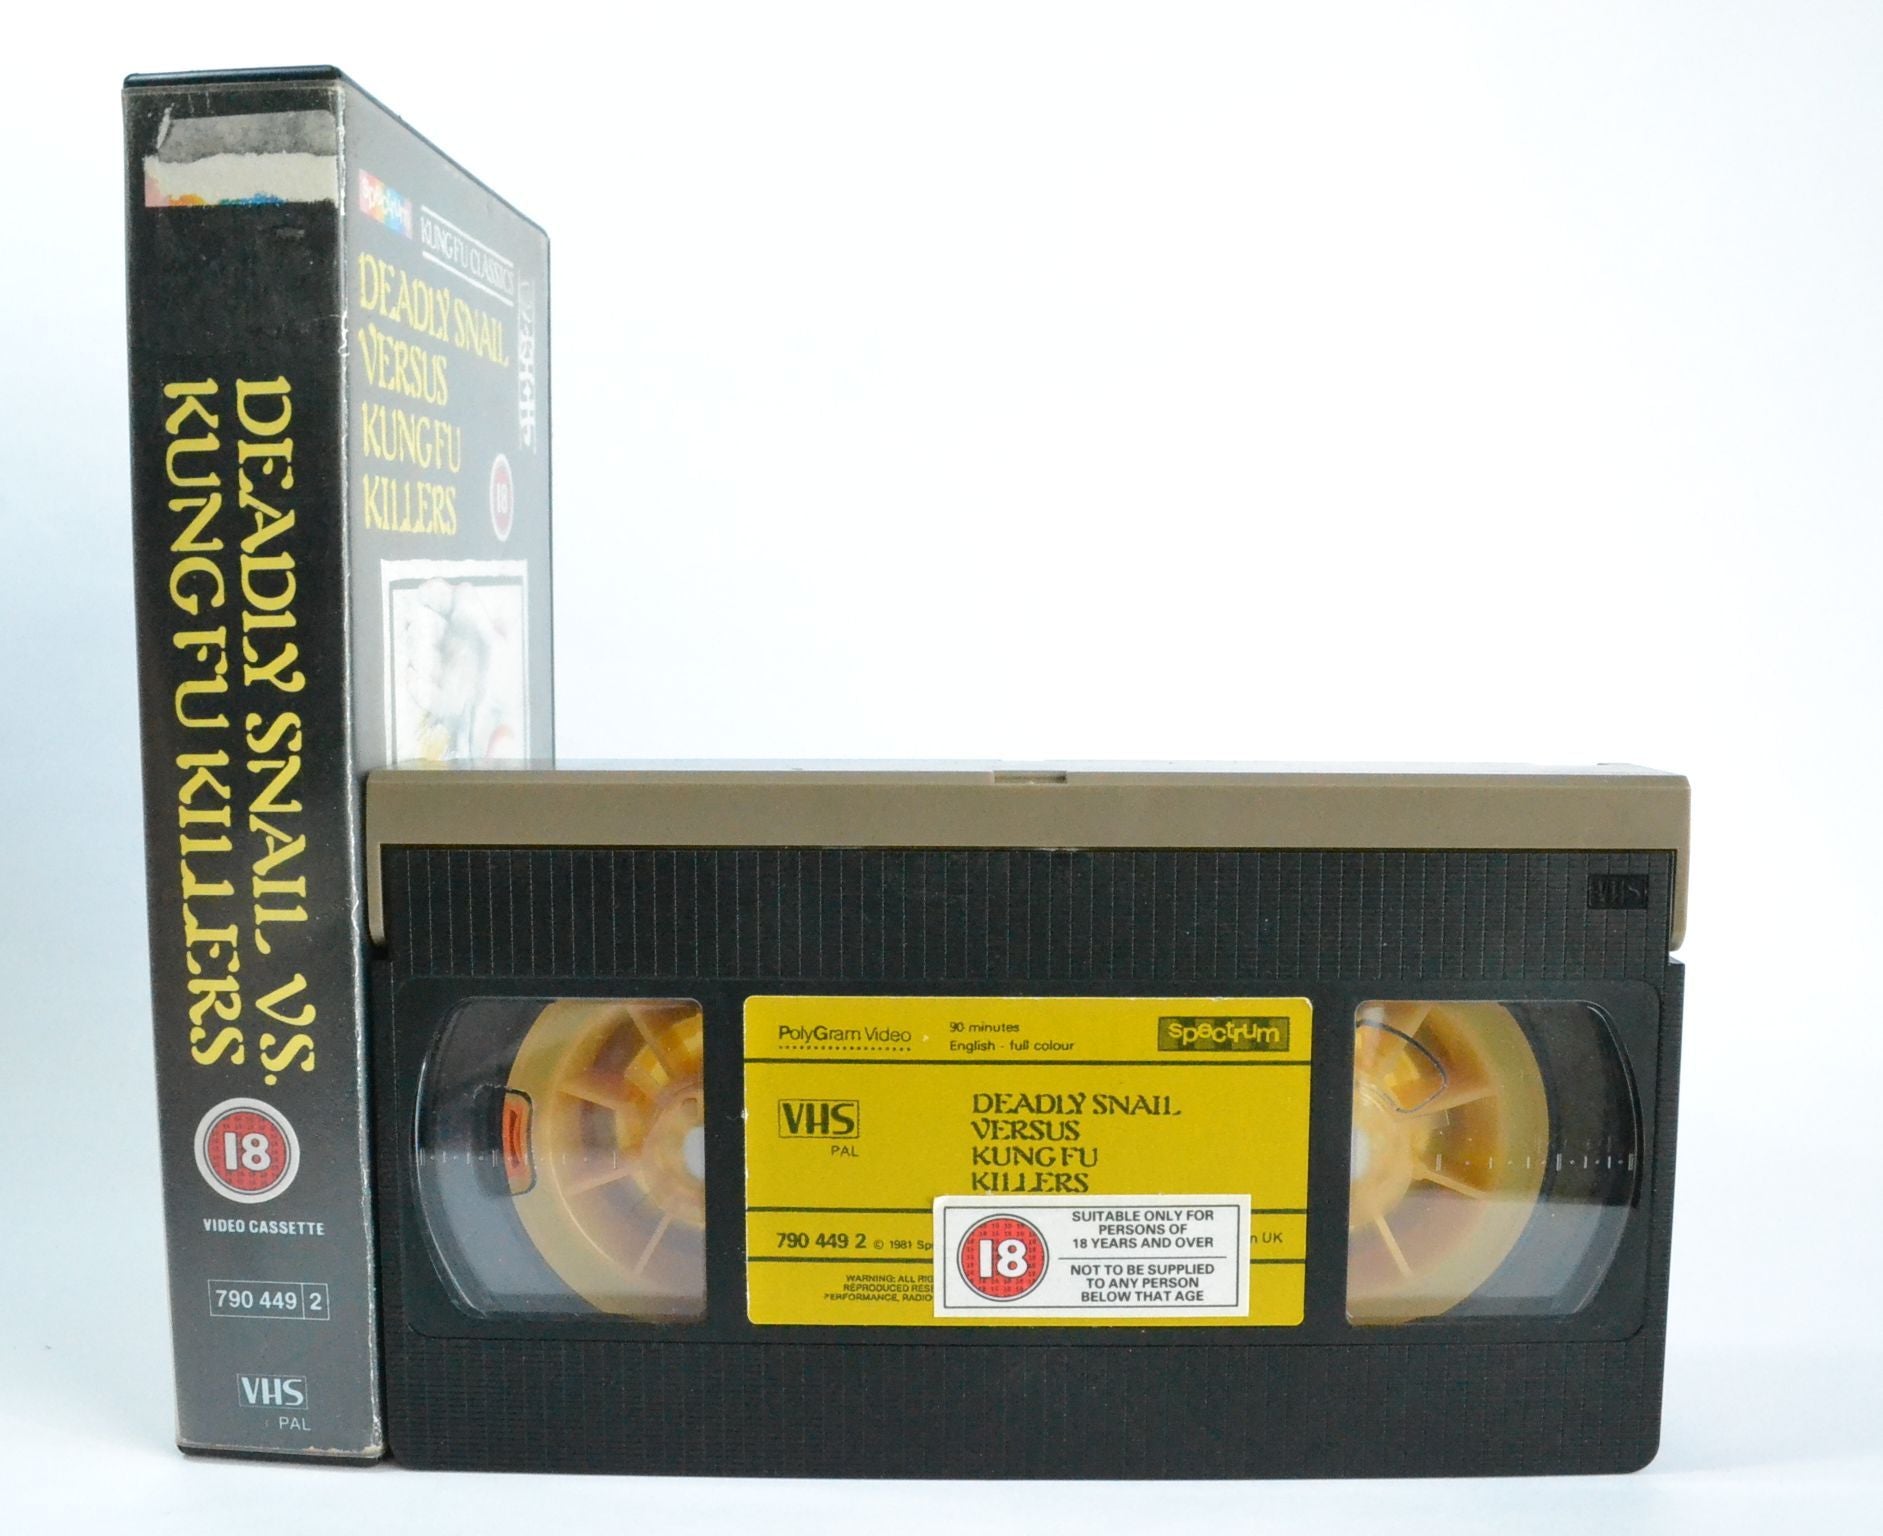 Deadly Snail Versus Kung Fu Killers: (1981) Tony Wong [Spectrum Pre-Cert] VHS-